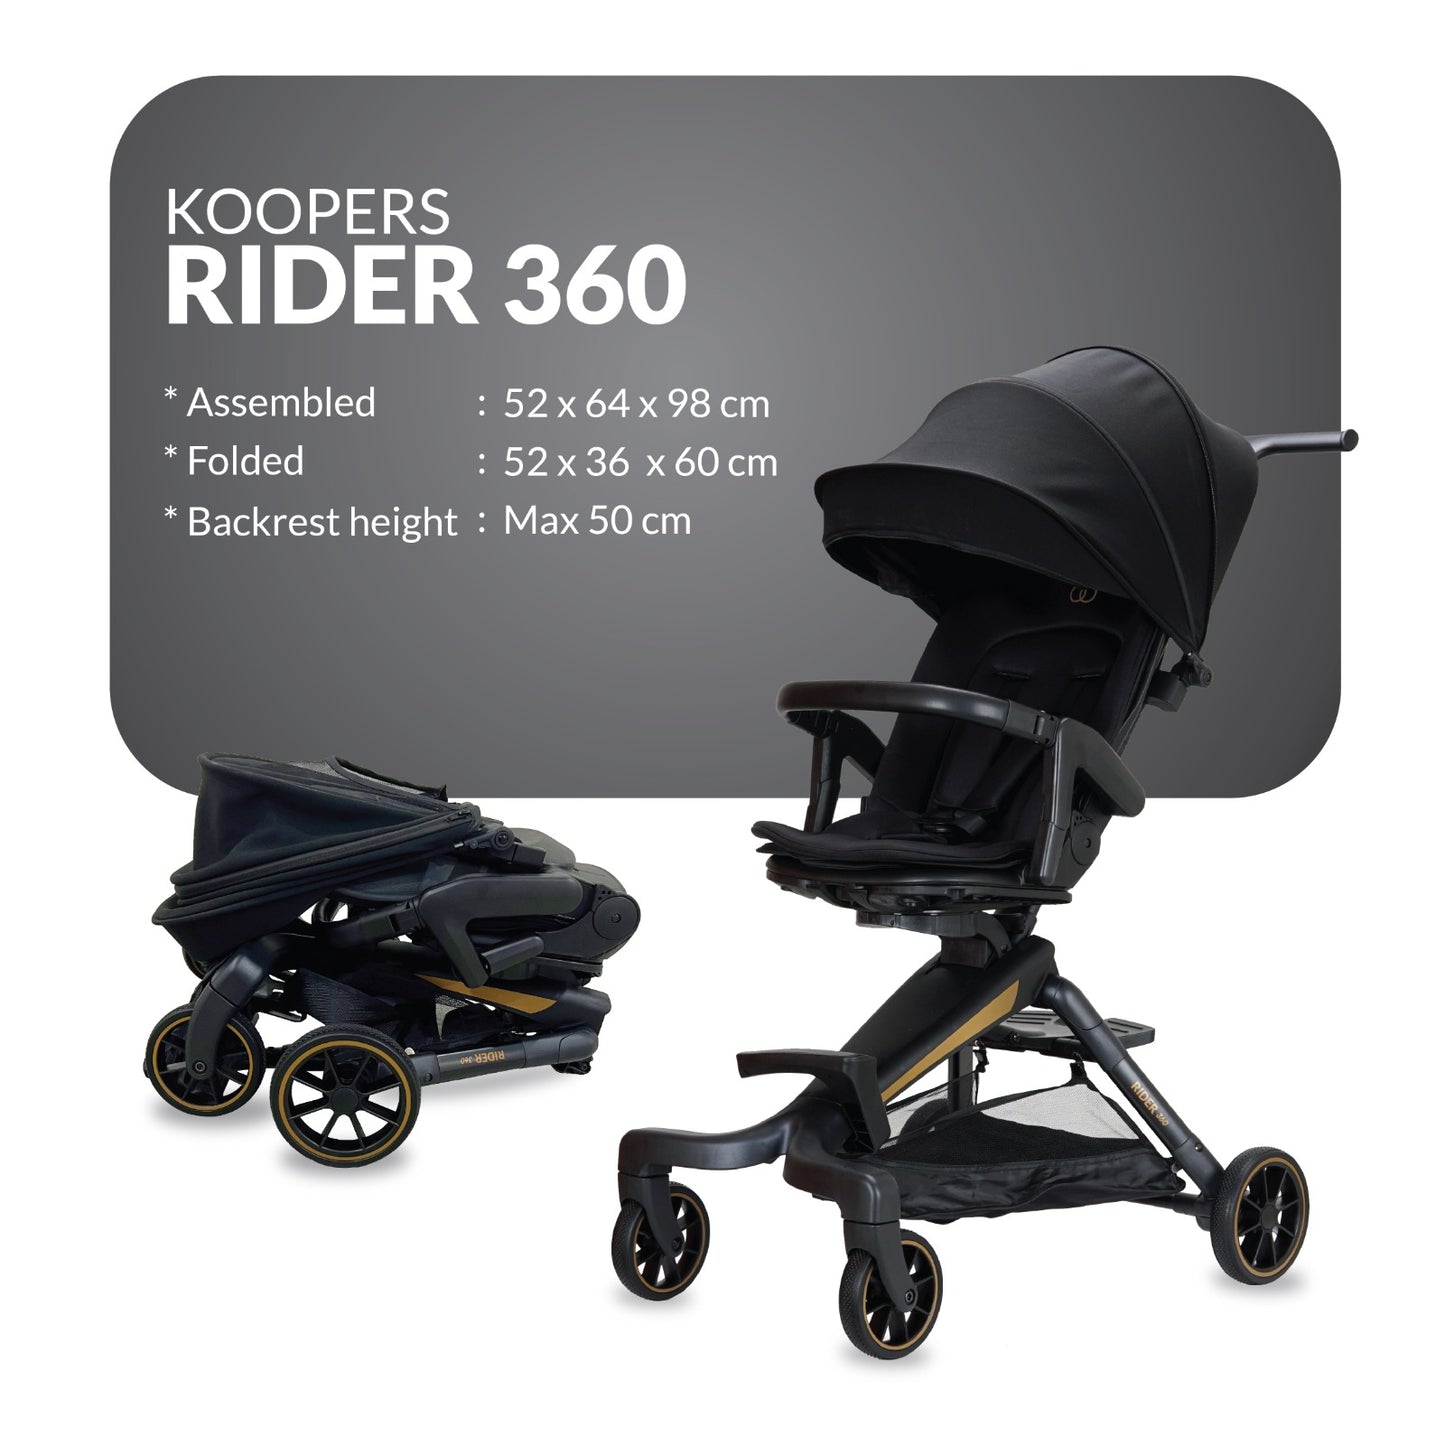 Koopers Magic Rider 360 Stroller EN1888 Approved